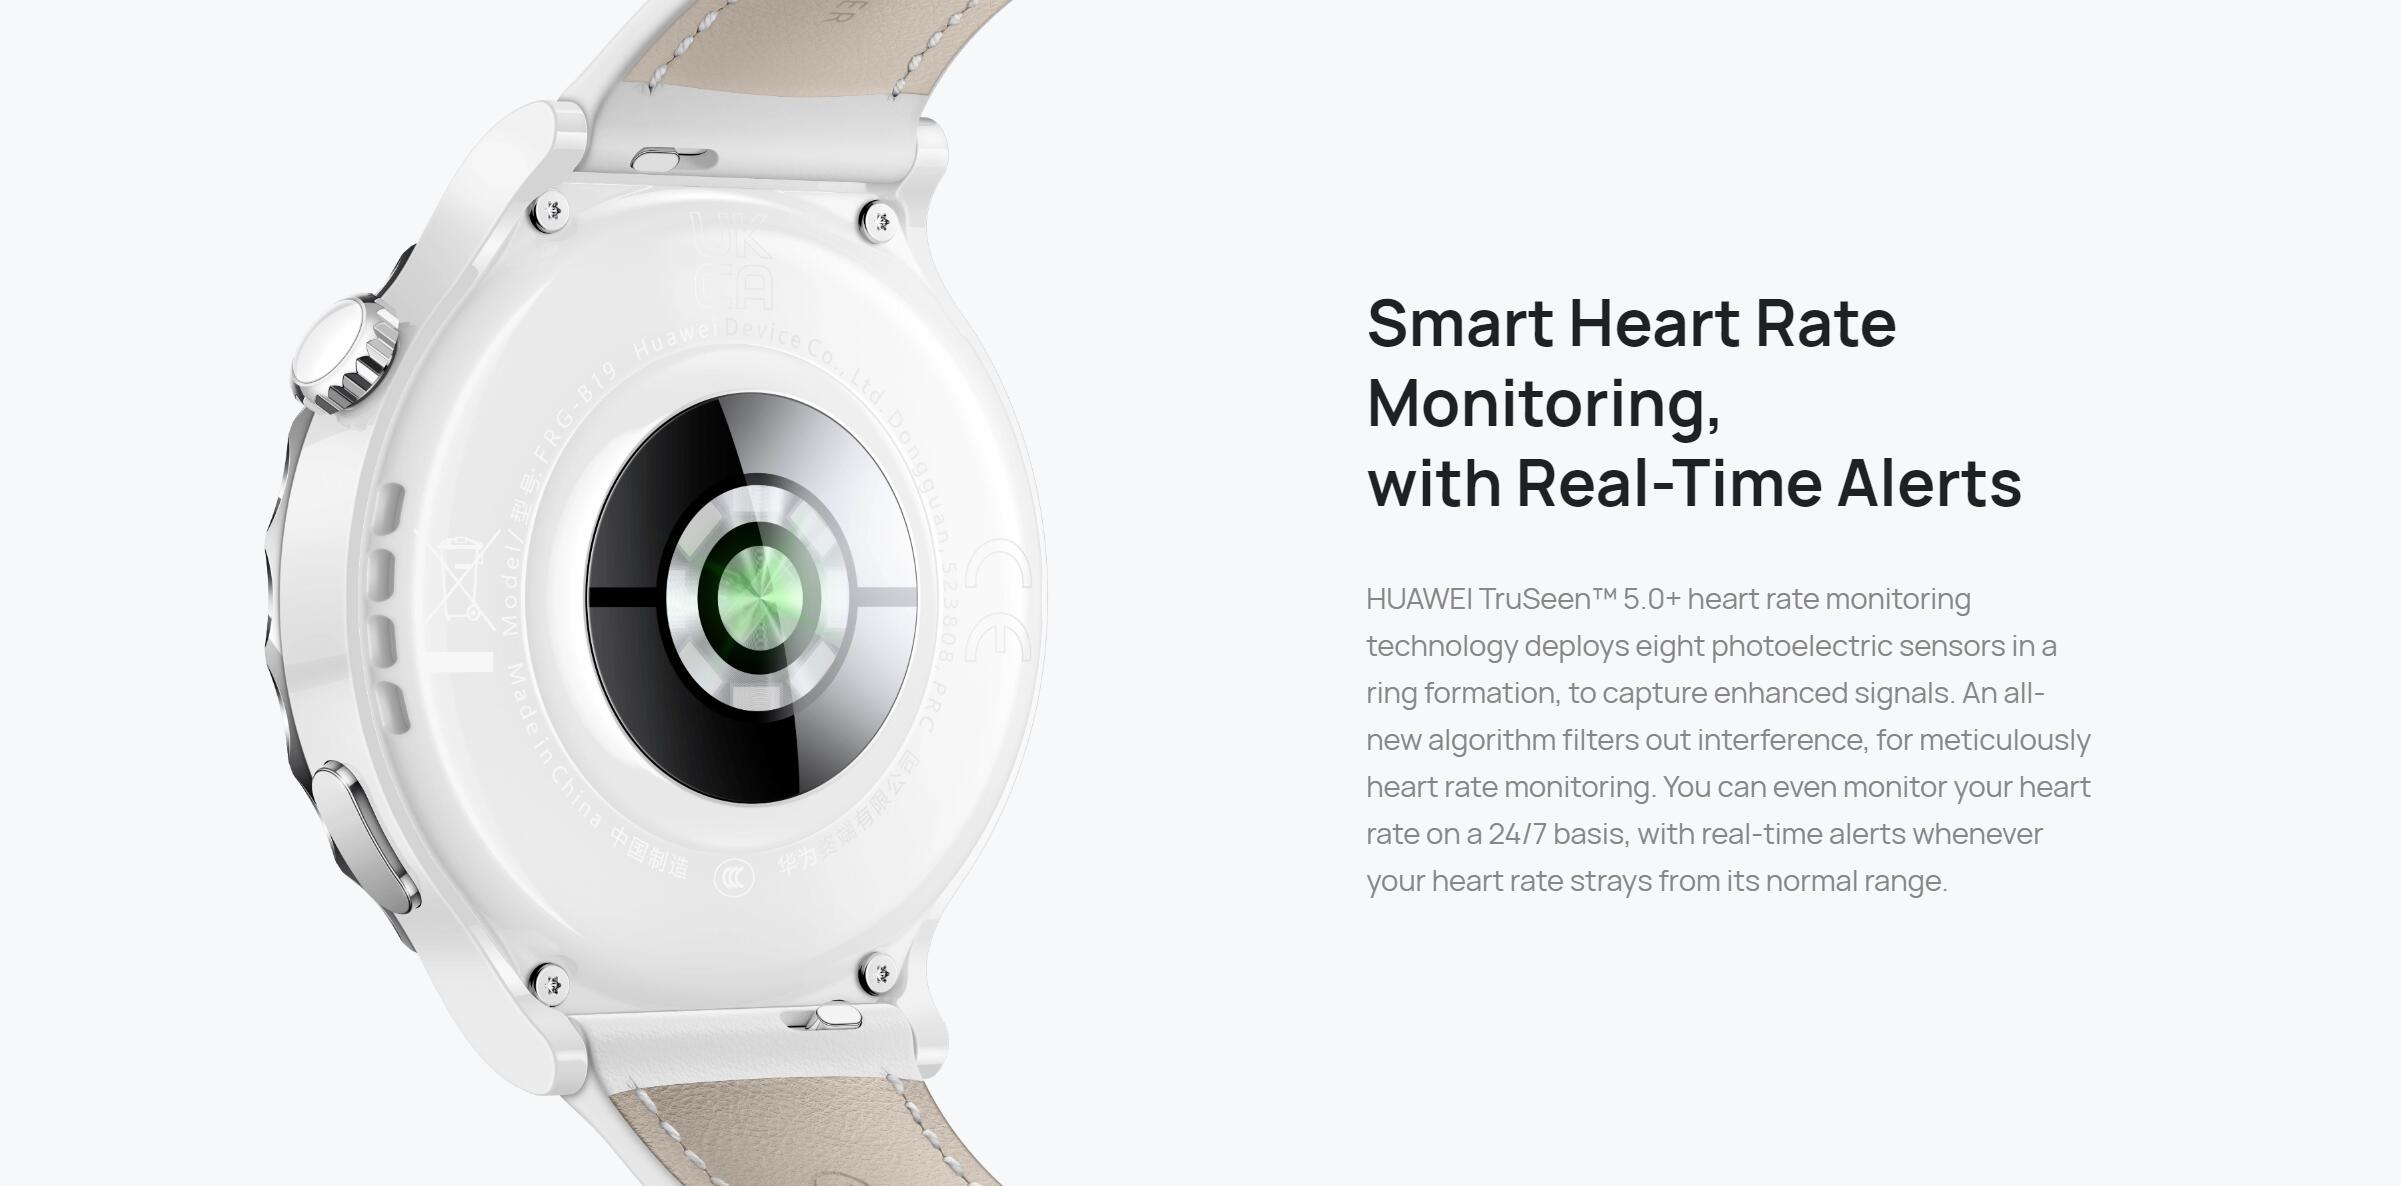 Huawei Watch GT 3 Pro Ceramic - 43MM